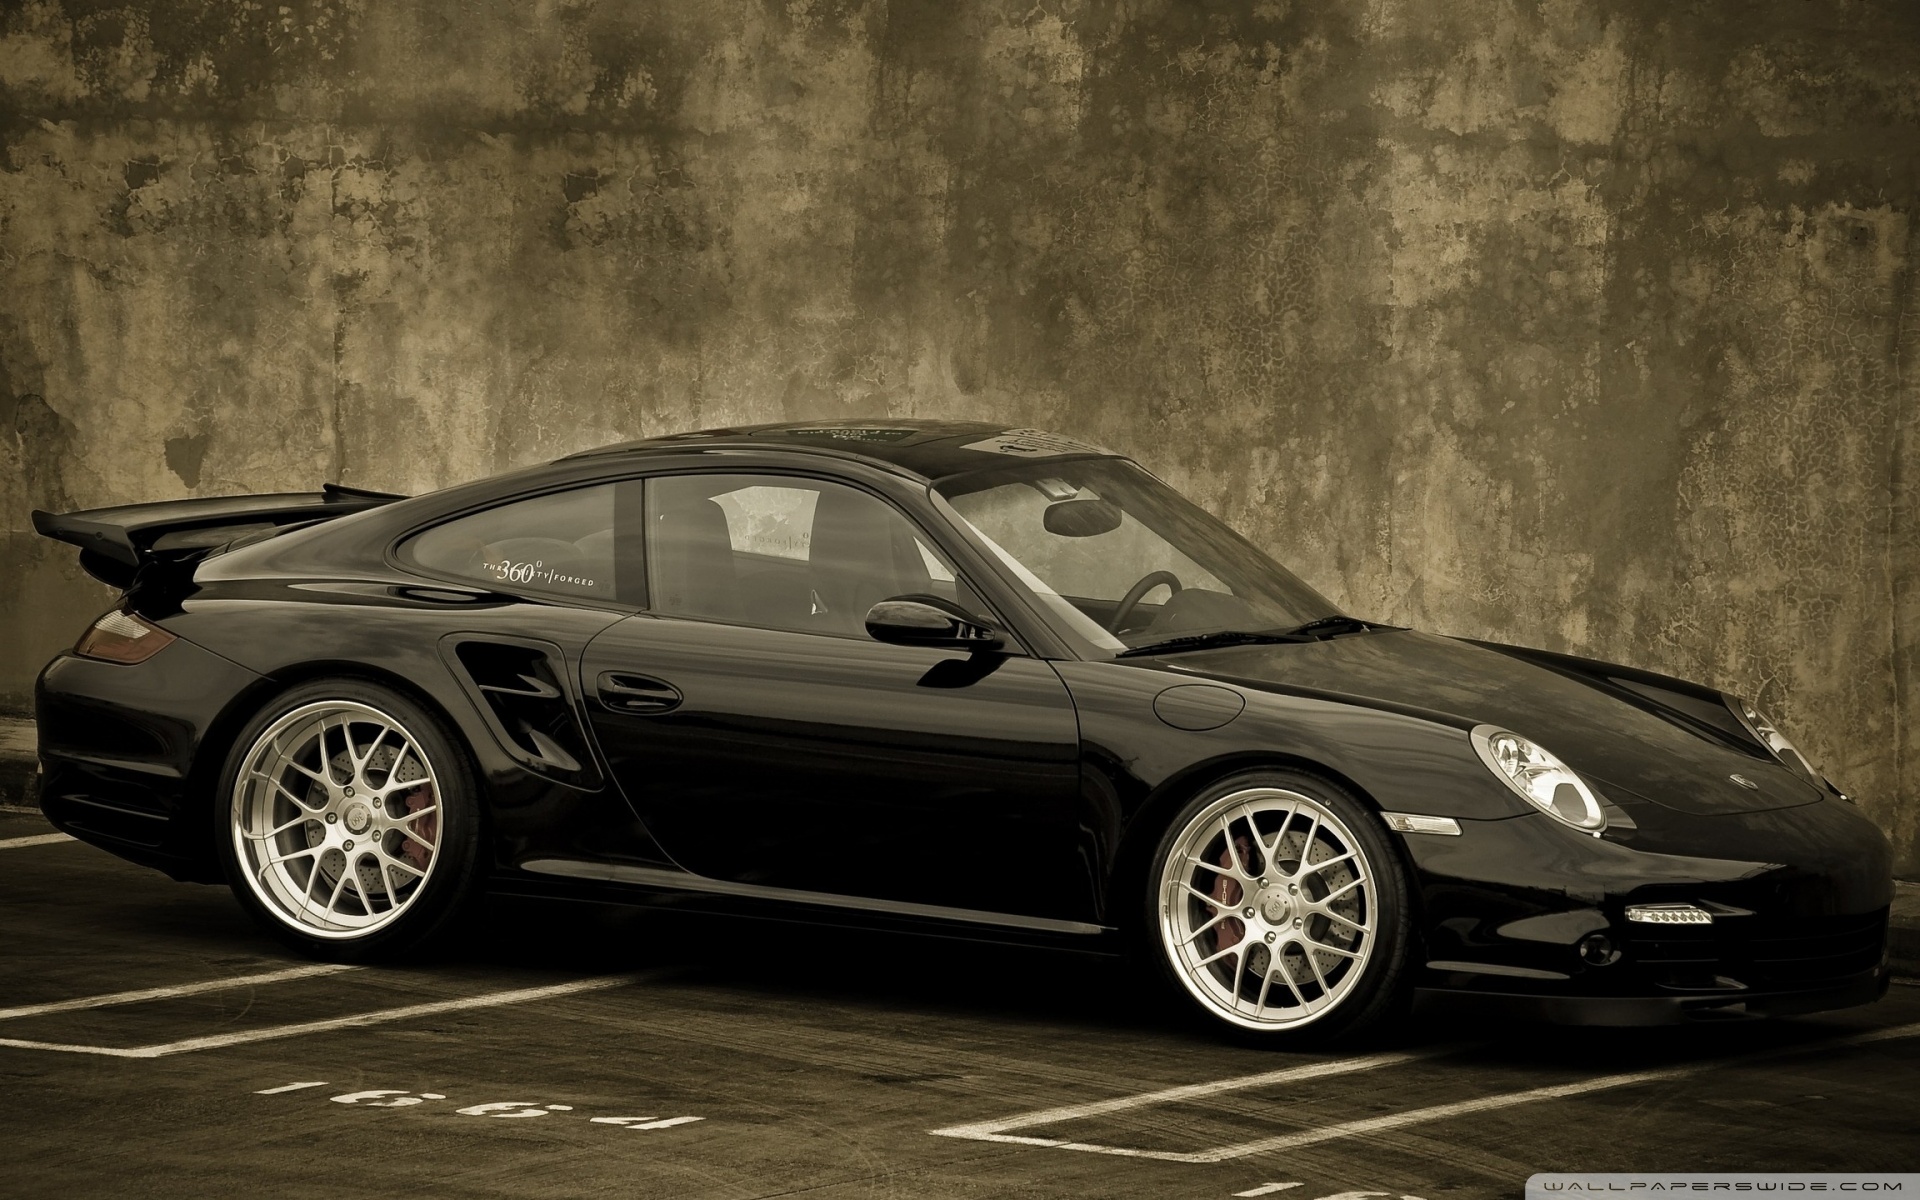 Black Porsche Car 4K HD Desktop Wallpaper for 4K Ultra HD TV